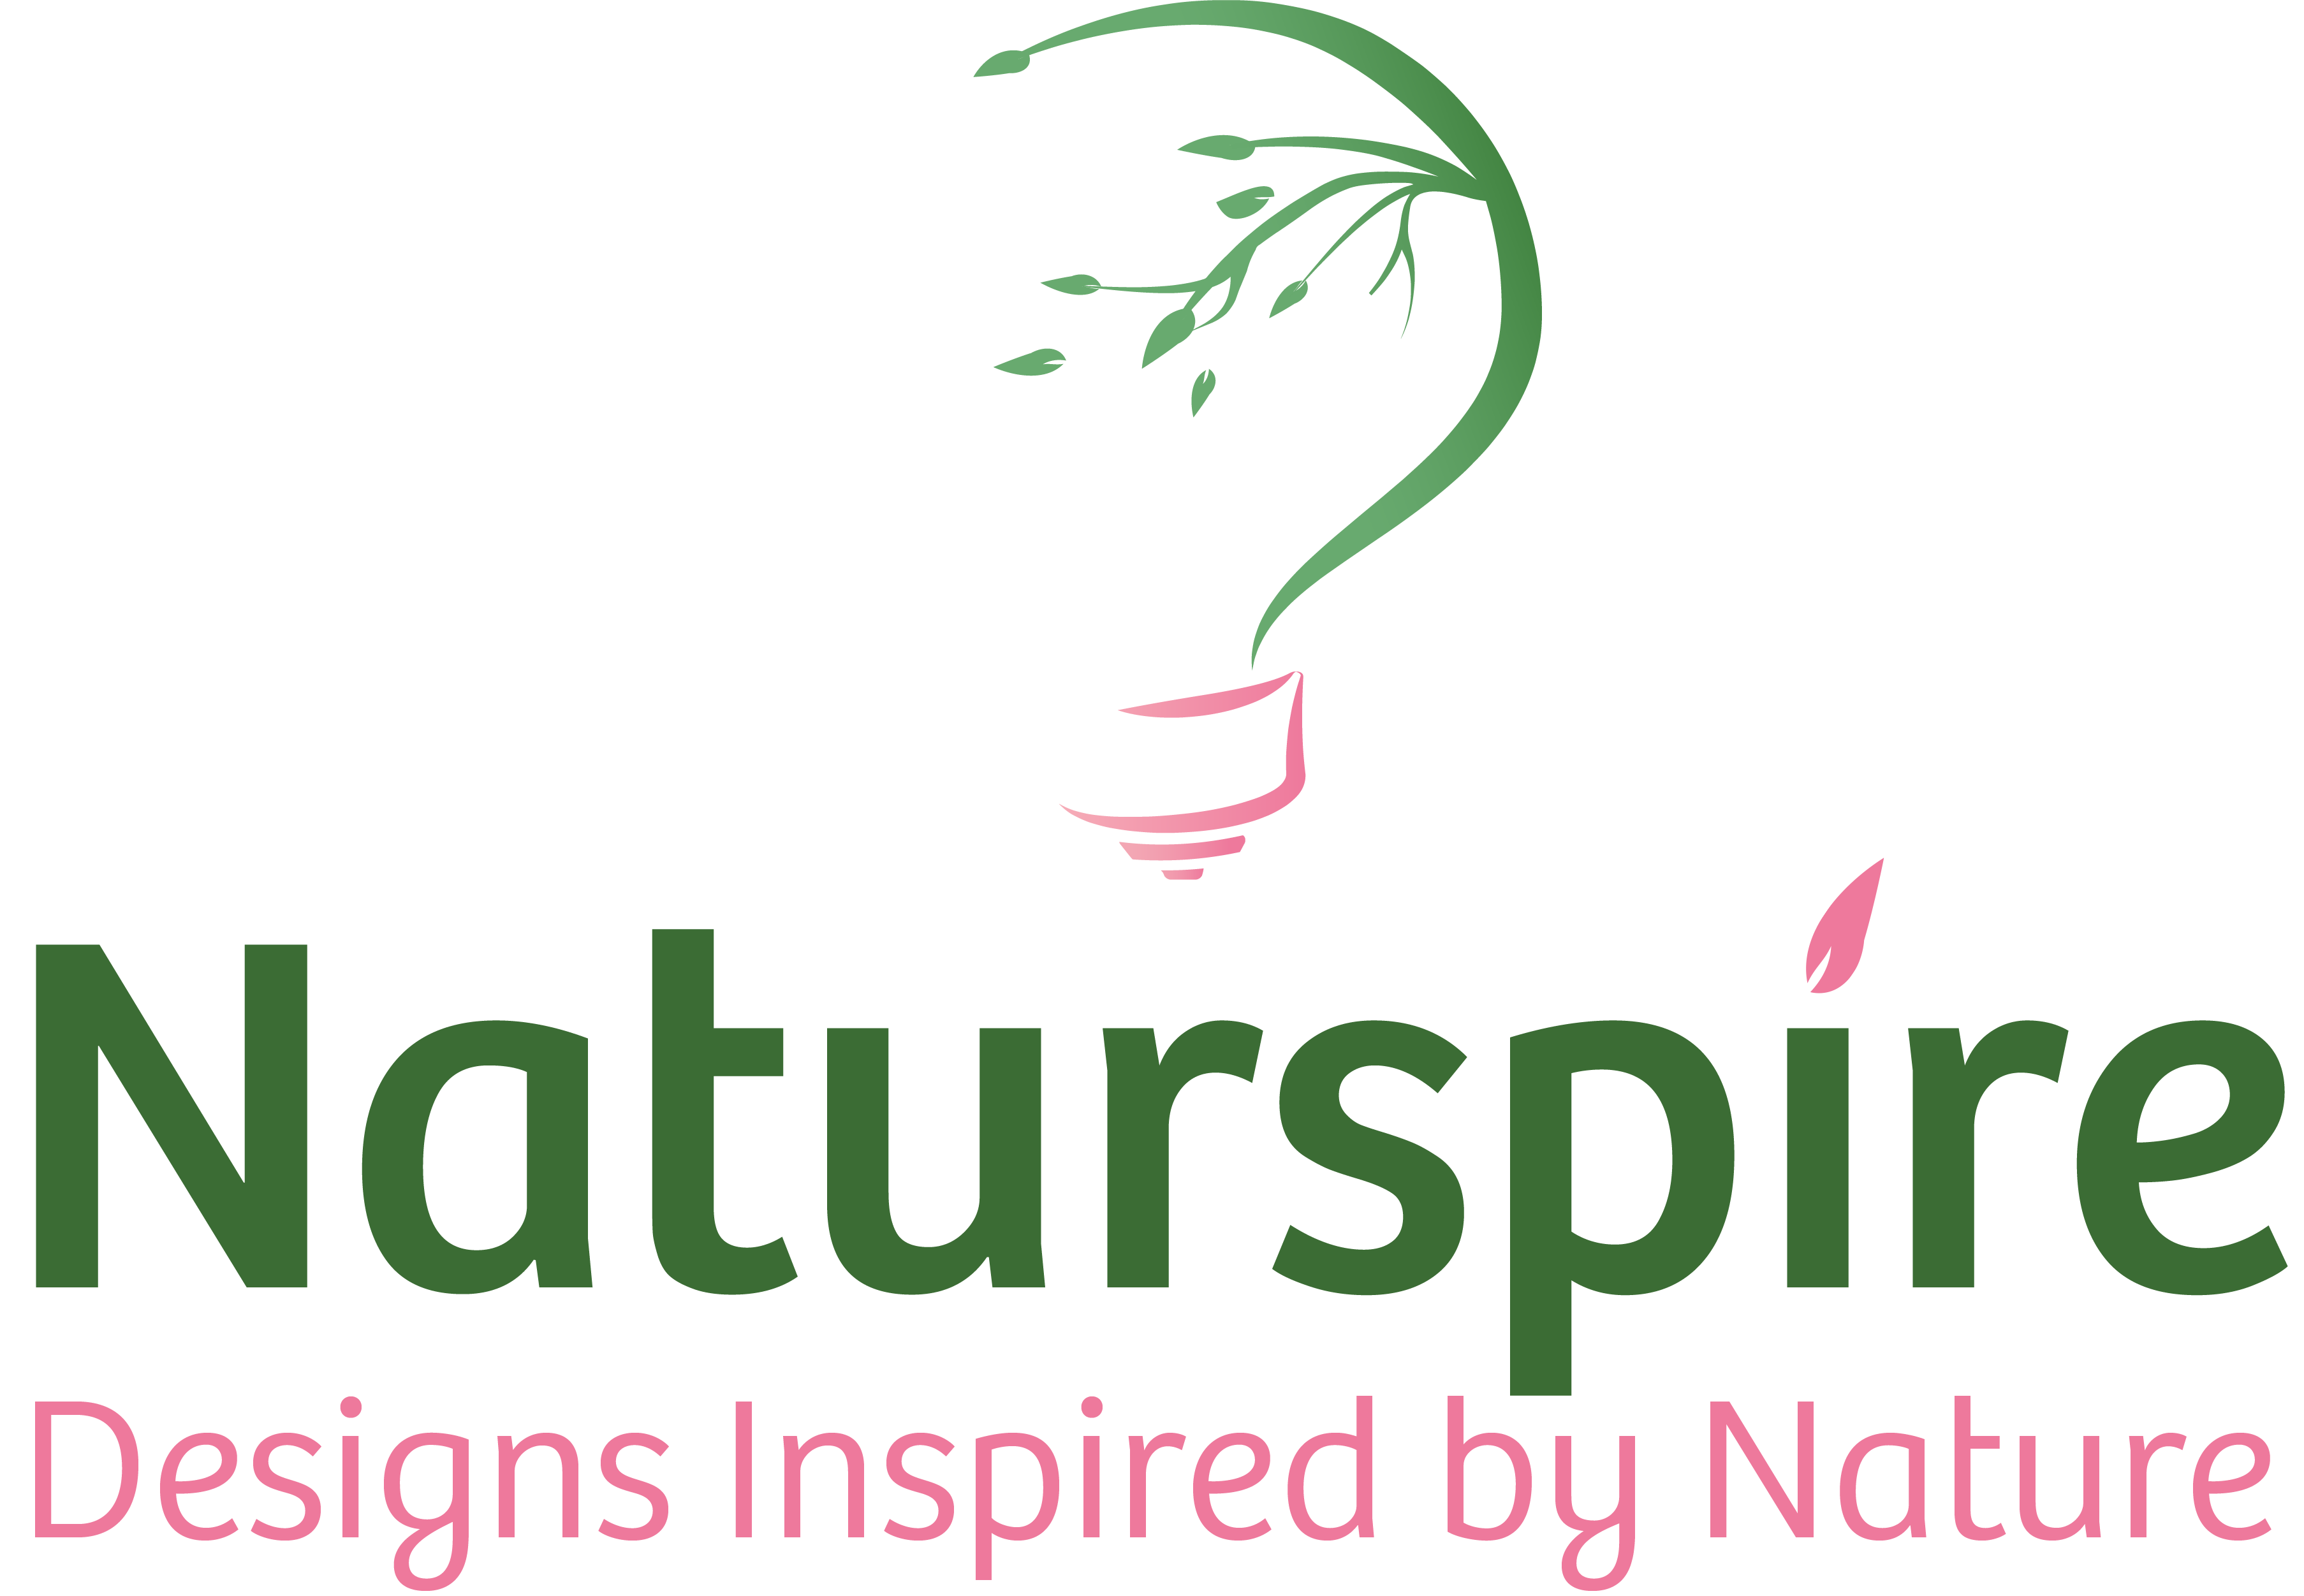 Naturspire Logo